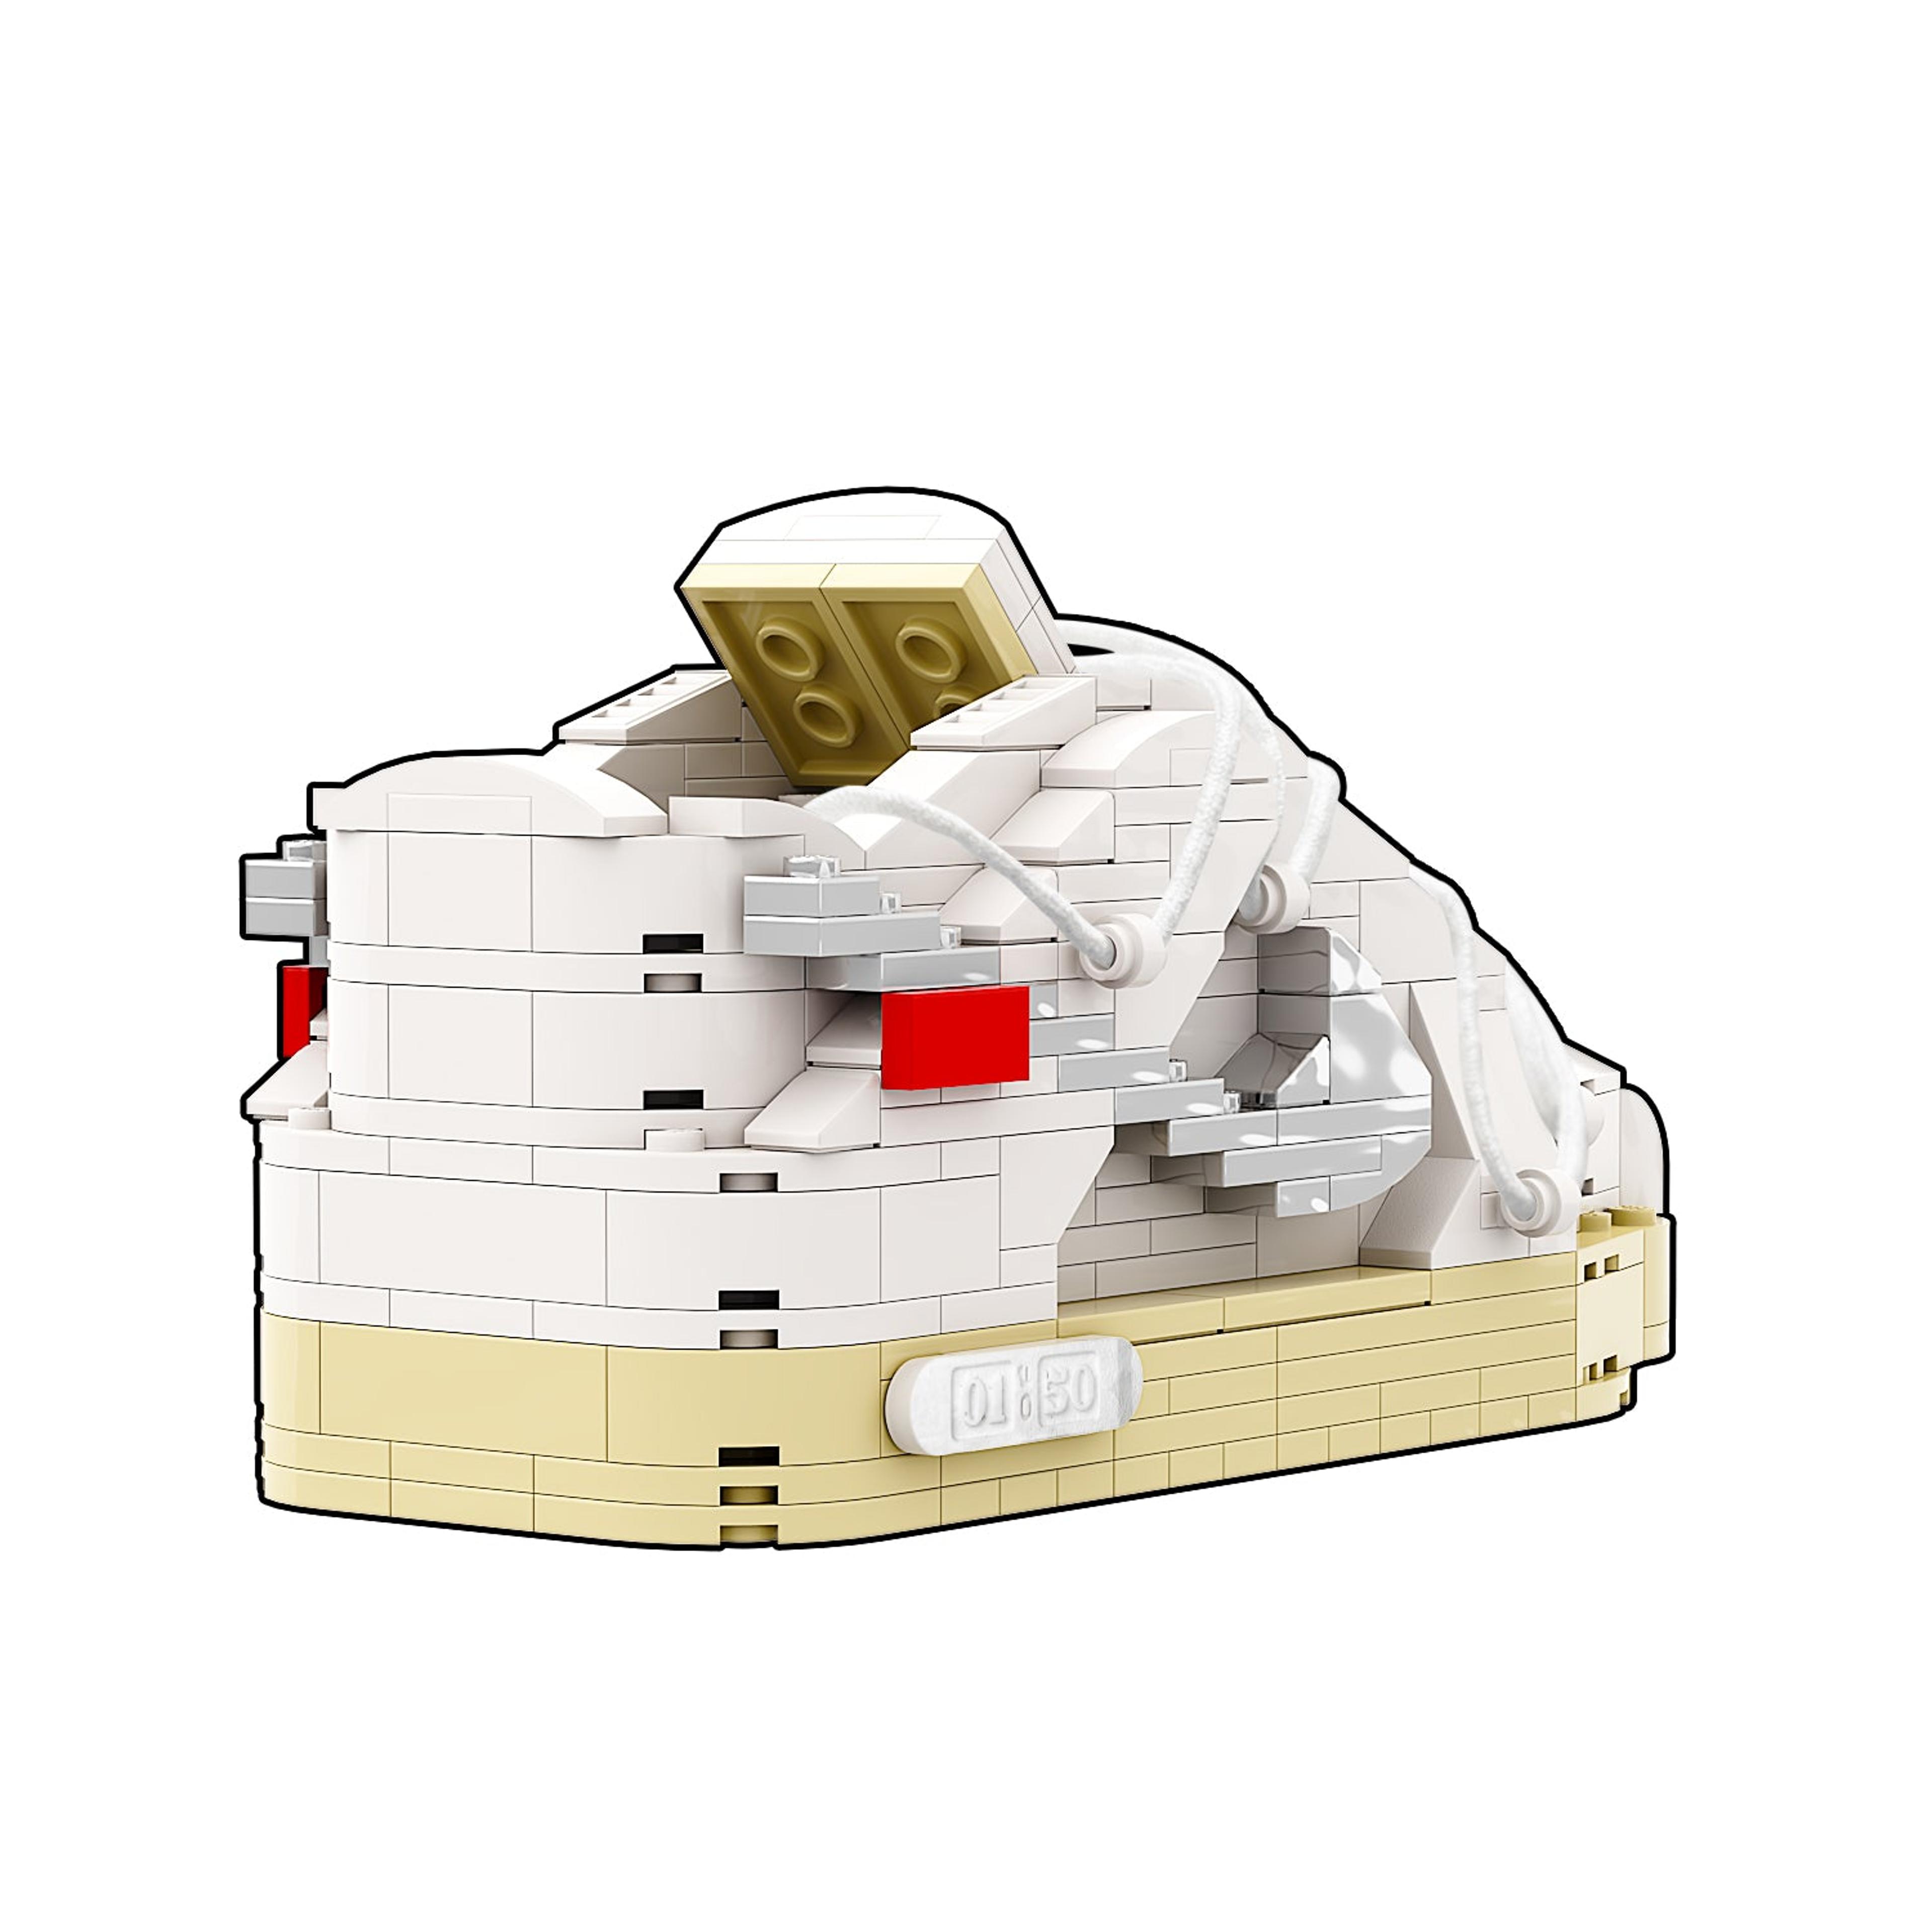 Alternate View 7 of REGULAR SB Dunk "Off-White Lot 1" Sneaker Bricks with Mini Figur